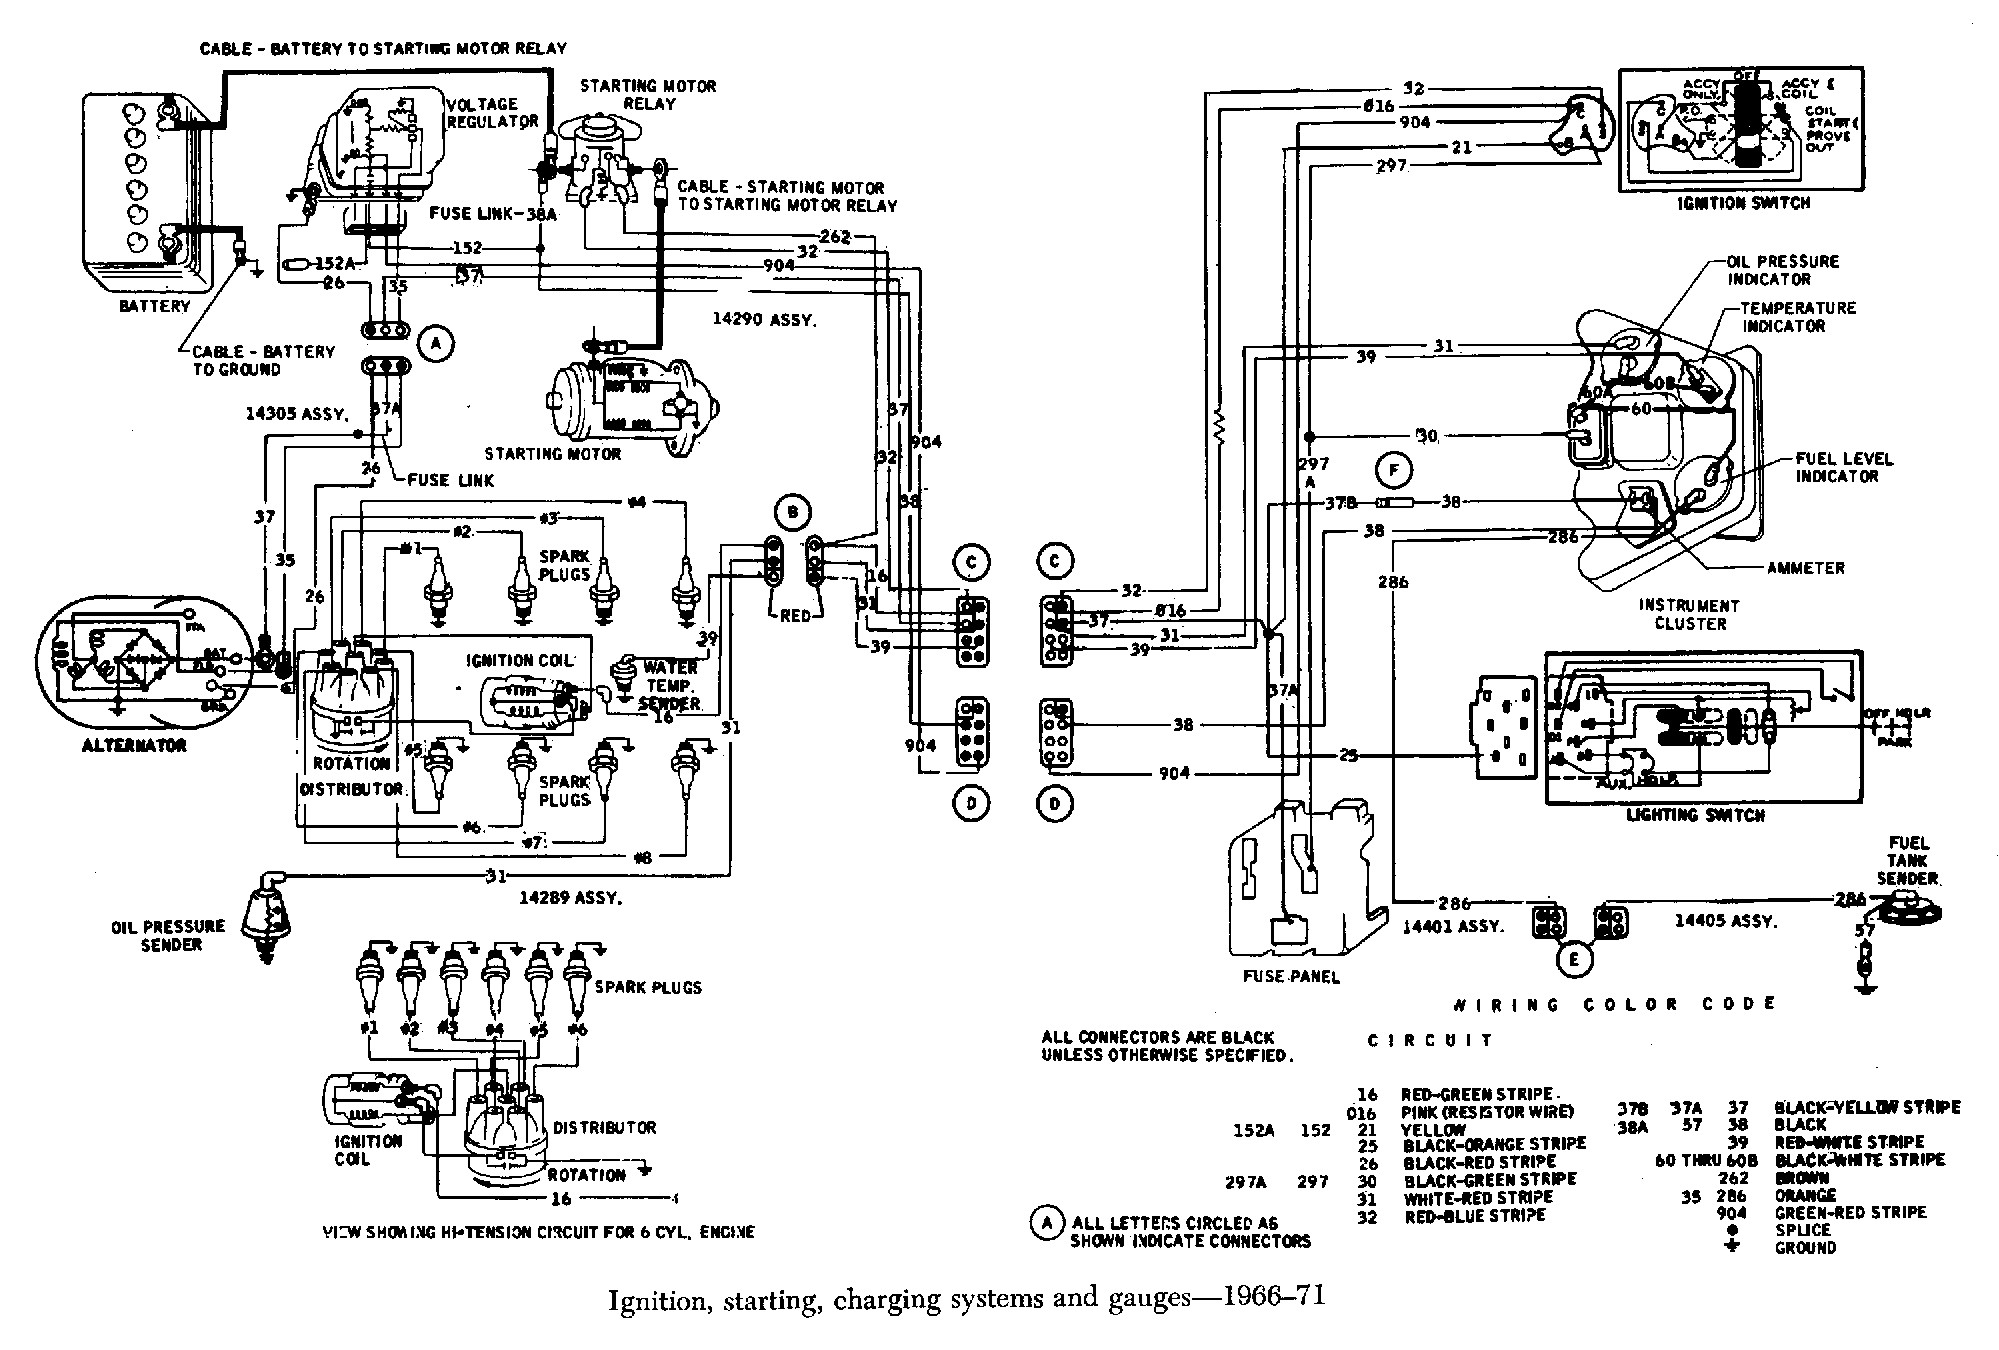 Chevy 350 Engine Wiring Diagram Chevy 350 Starter solenoid Wiring Diagram 73 Buick Wiring Diagram